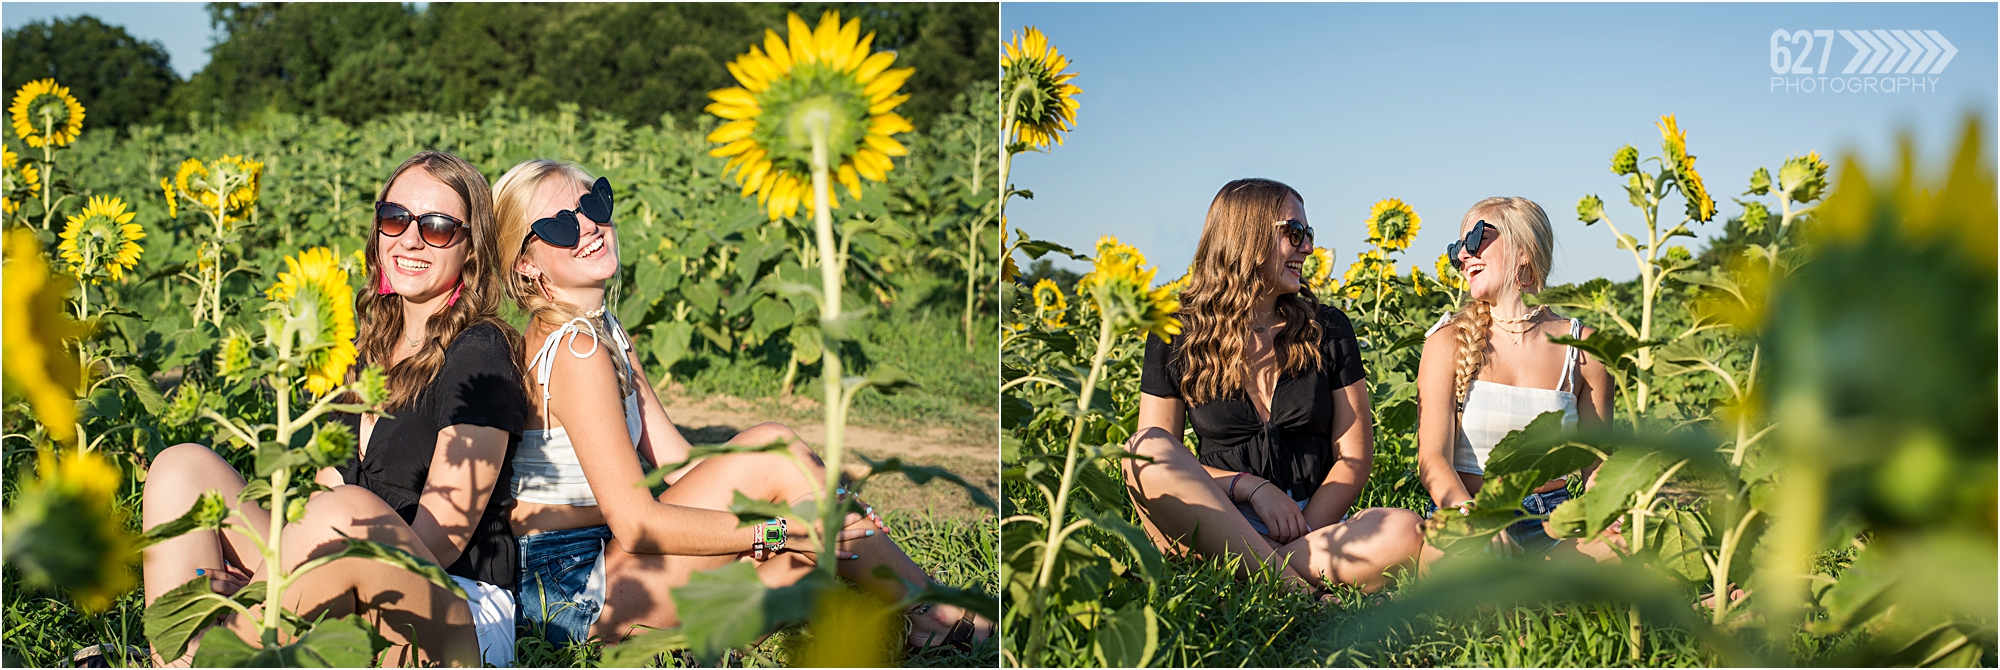 senior girls in sunflower field